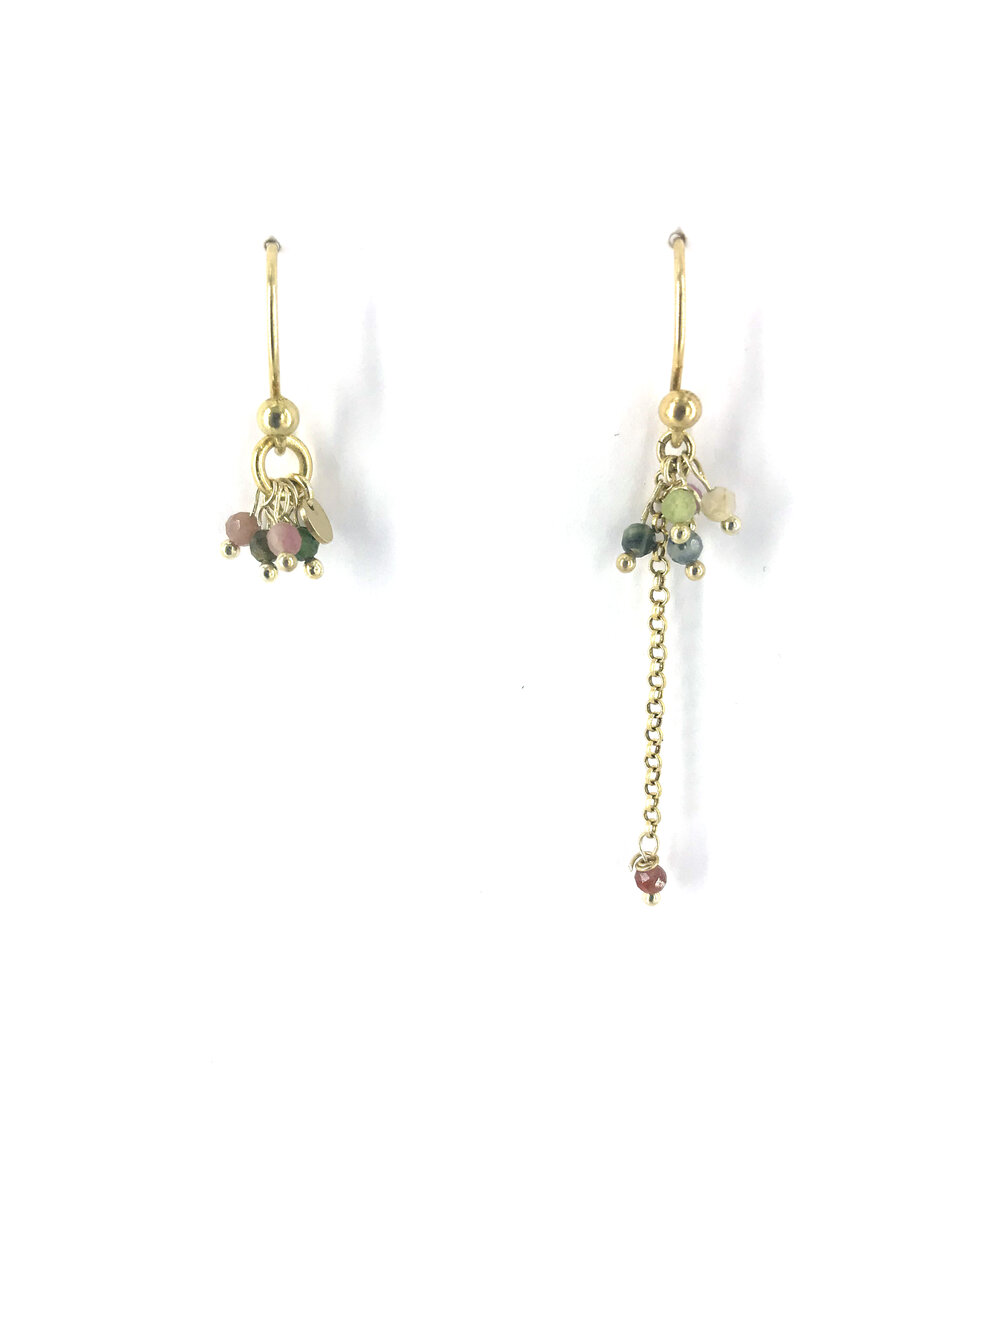 El principio Viva Rareza tiny jewelry earrings goldplated joyitas pendientes chapados en oro  ensanchez fashion moda — ENSANCHEZ